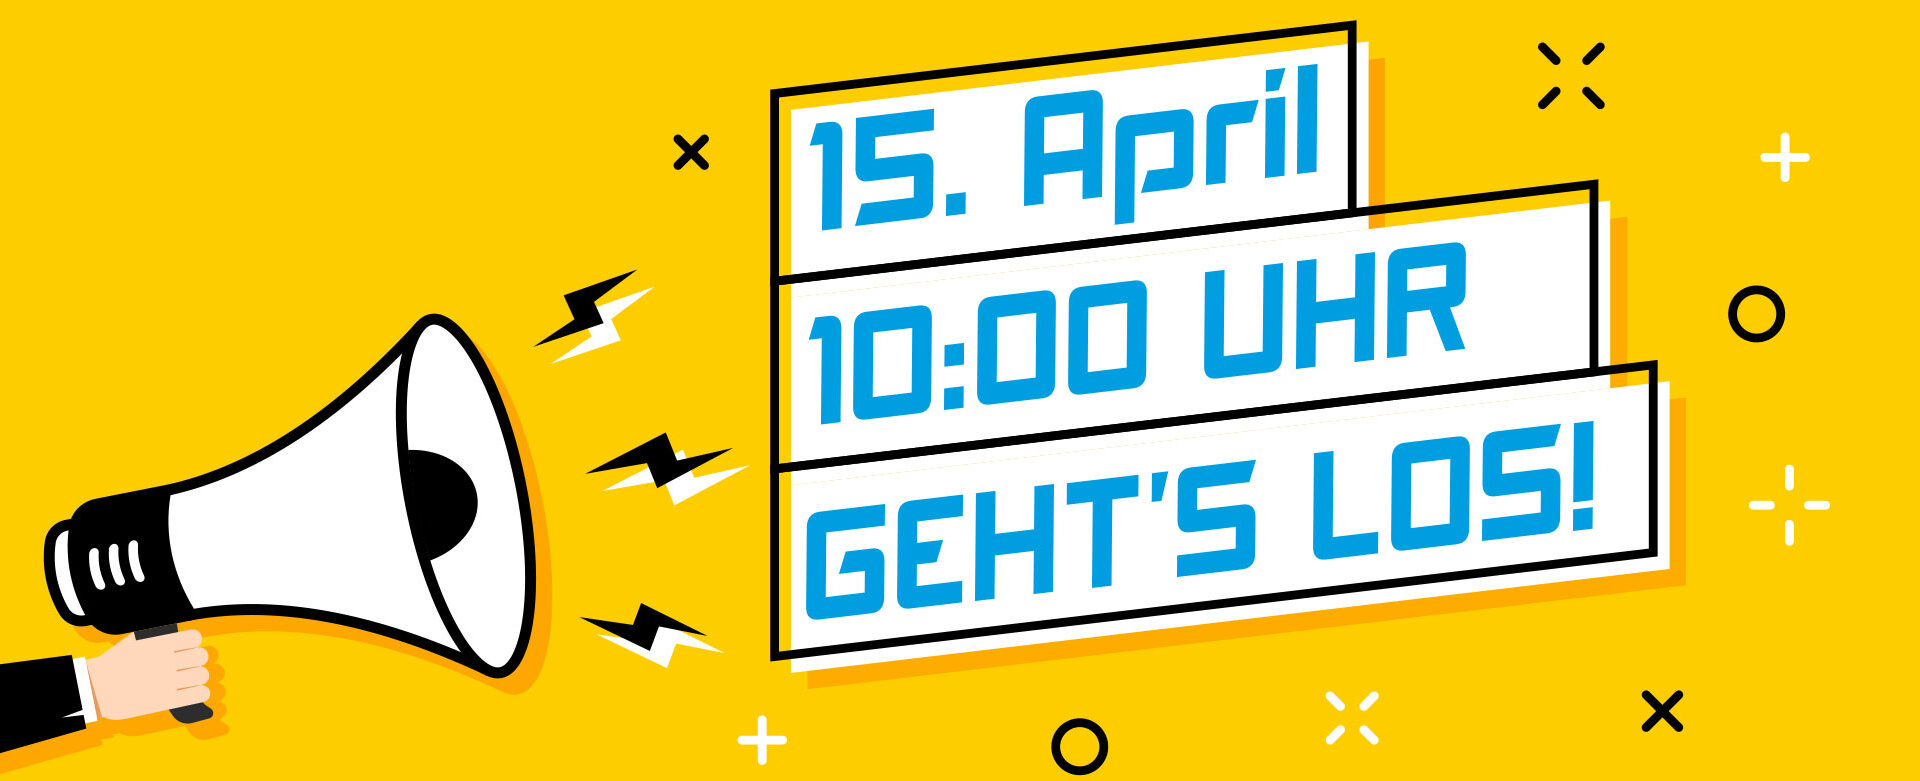 Save-the-date: 15. April - Arbeitseinsatz